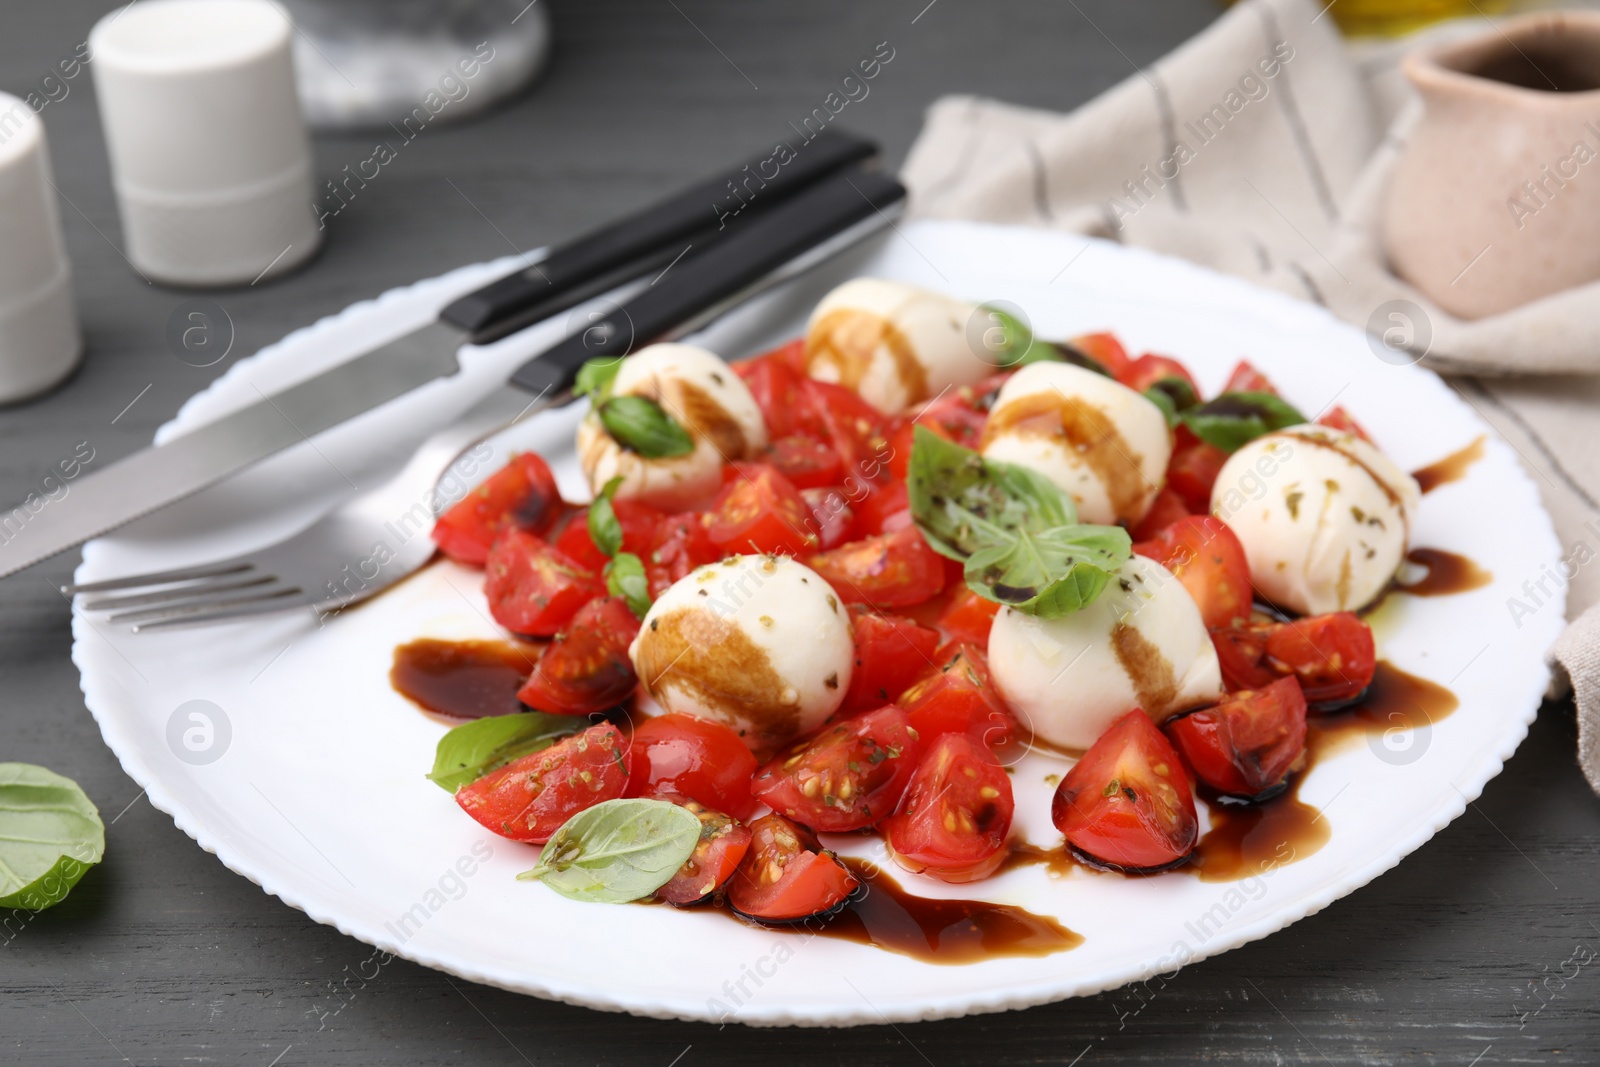 Photo of Tasty salad Caprese with tomatoes, mozzarella balls, basil and balsamic vinegar on grey table, closeup